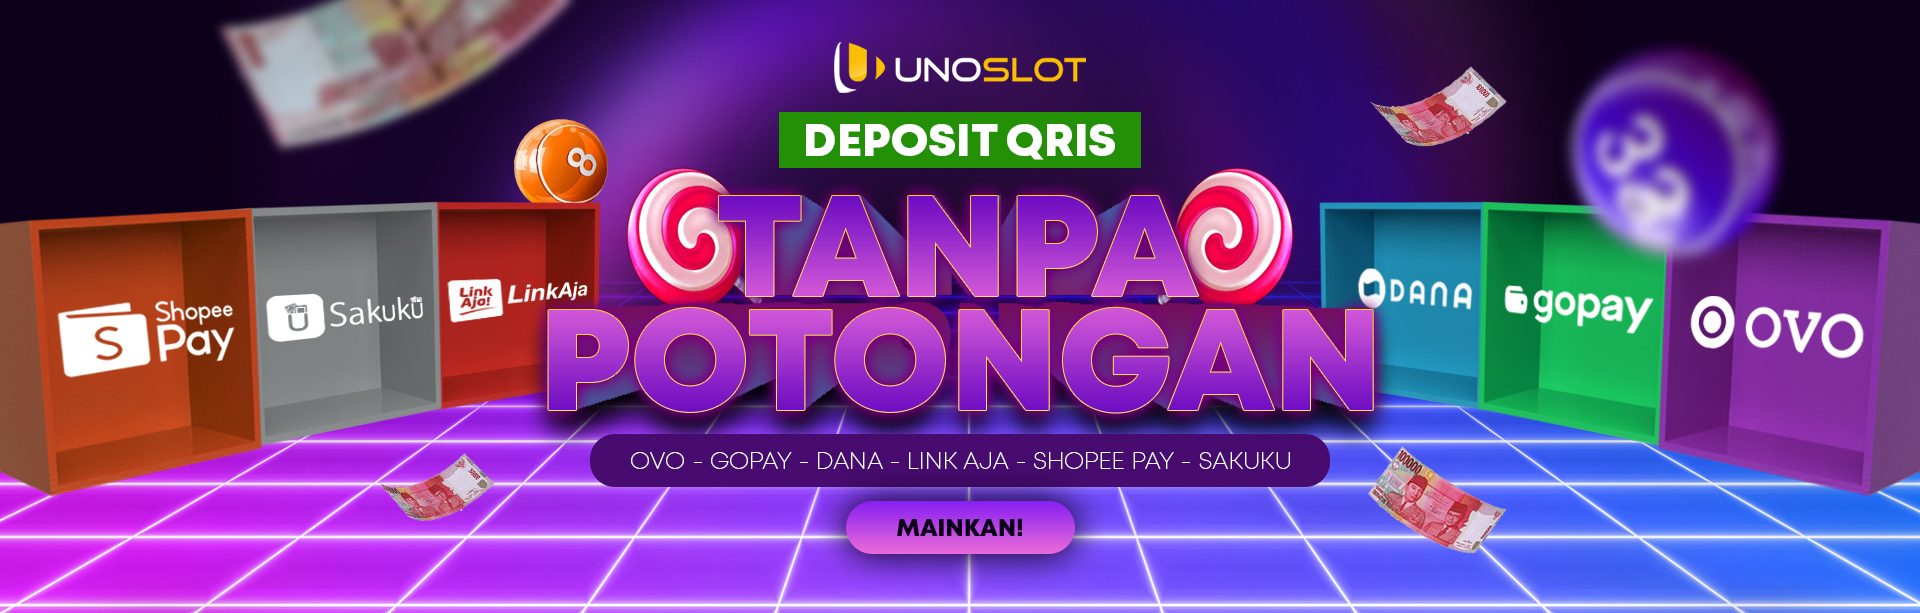 DEPOSIT E-MONEY TANPA POTONGAN